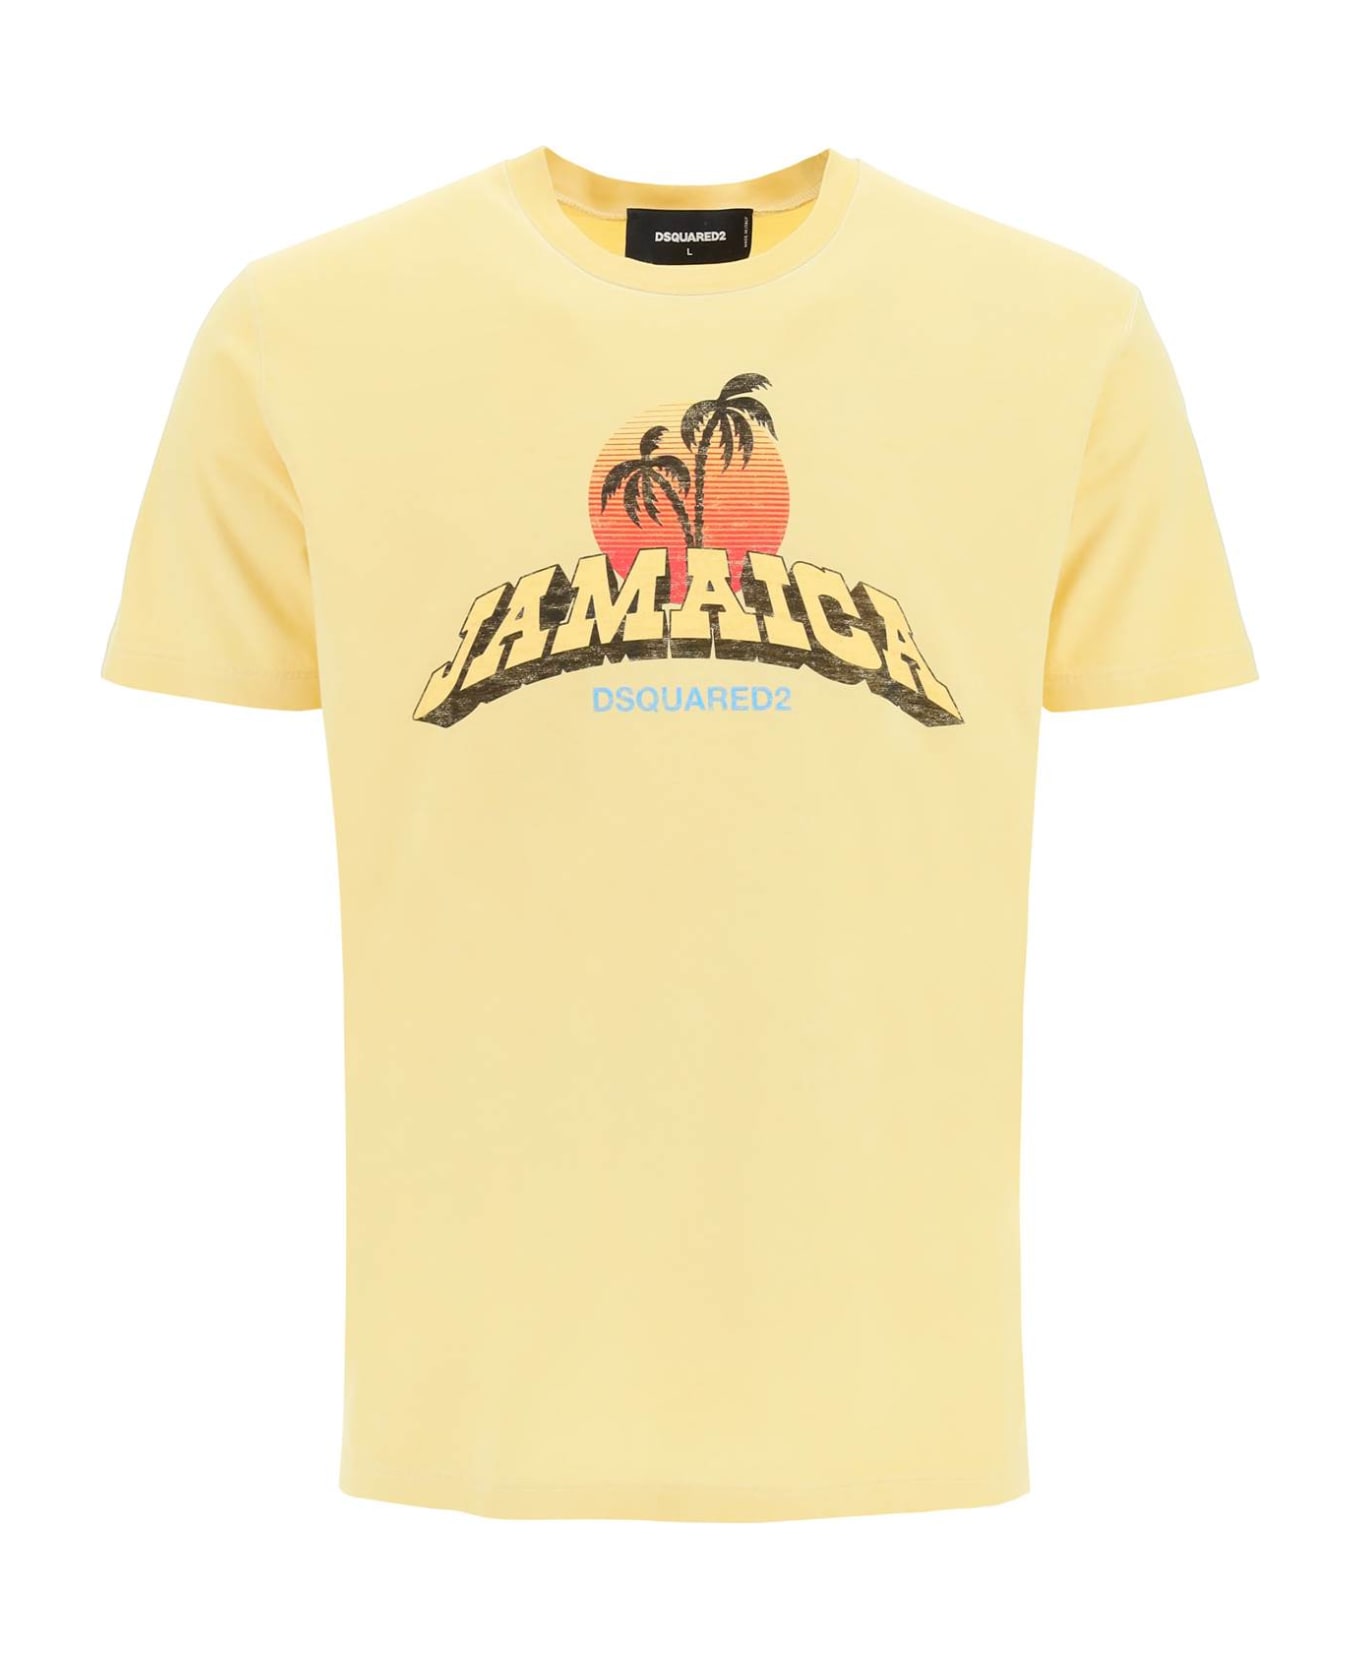 Dsquared2 Jamaica T-shirt - APRICOT TAN (Yellow)